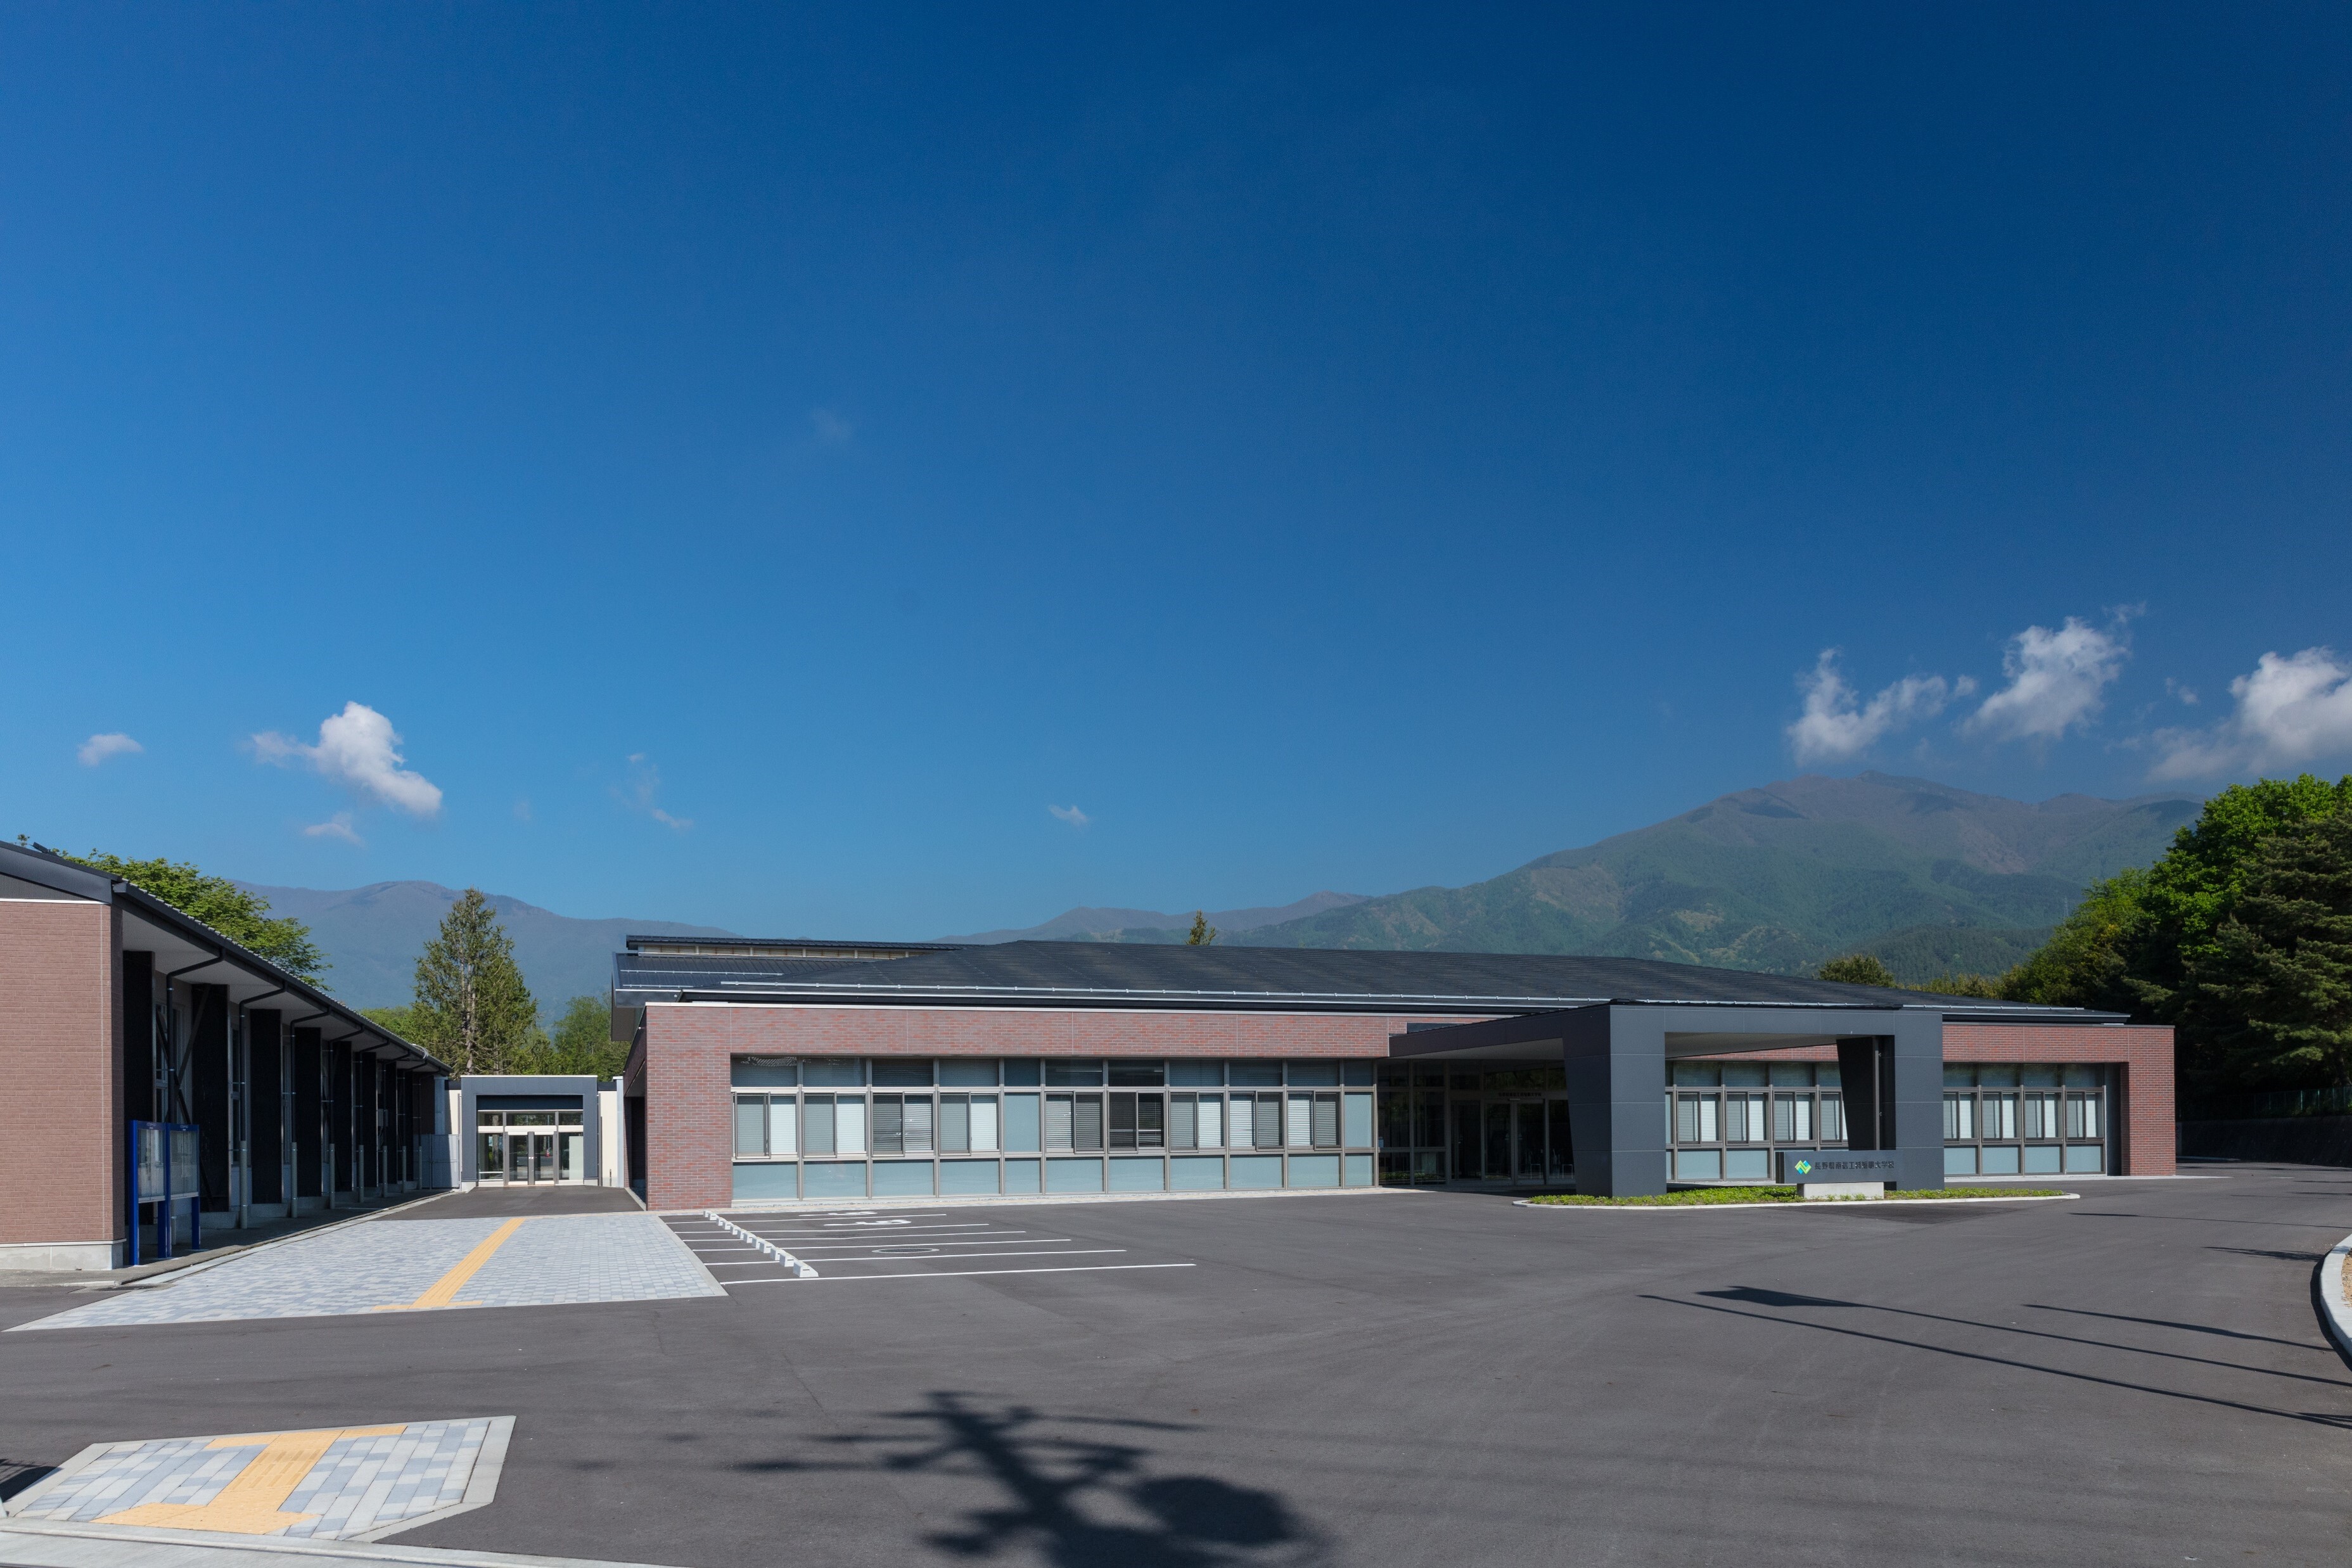 The Nagano Prefecture Nanshin Institute of Technology